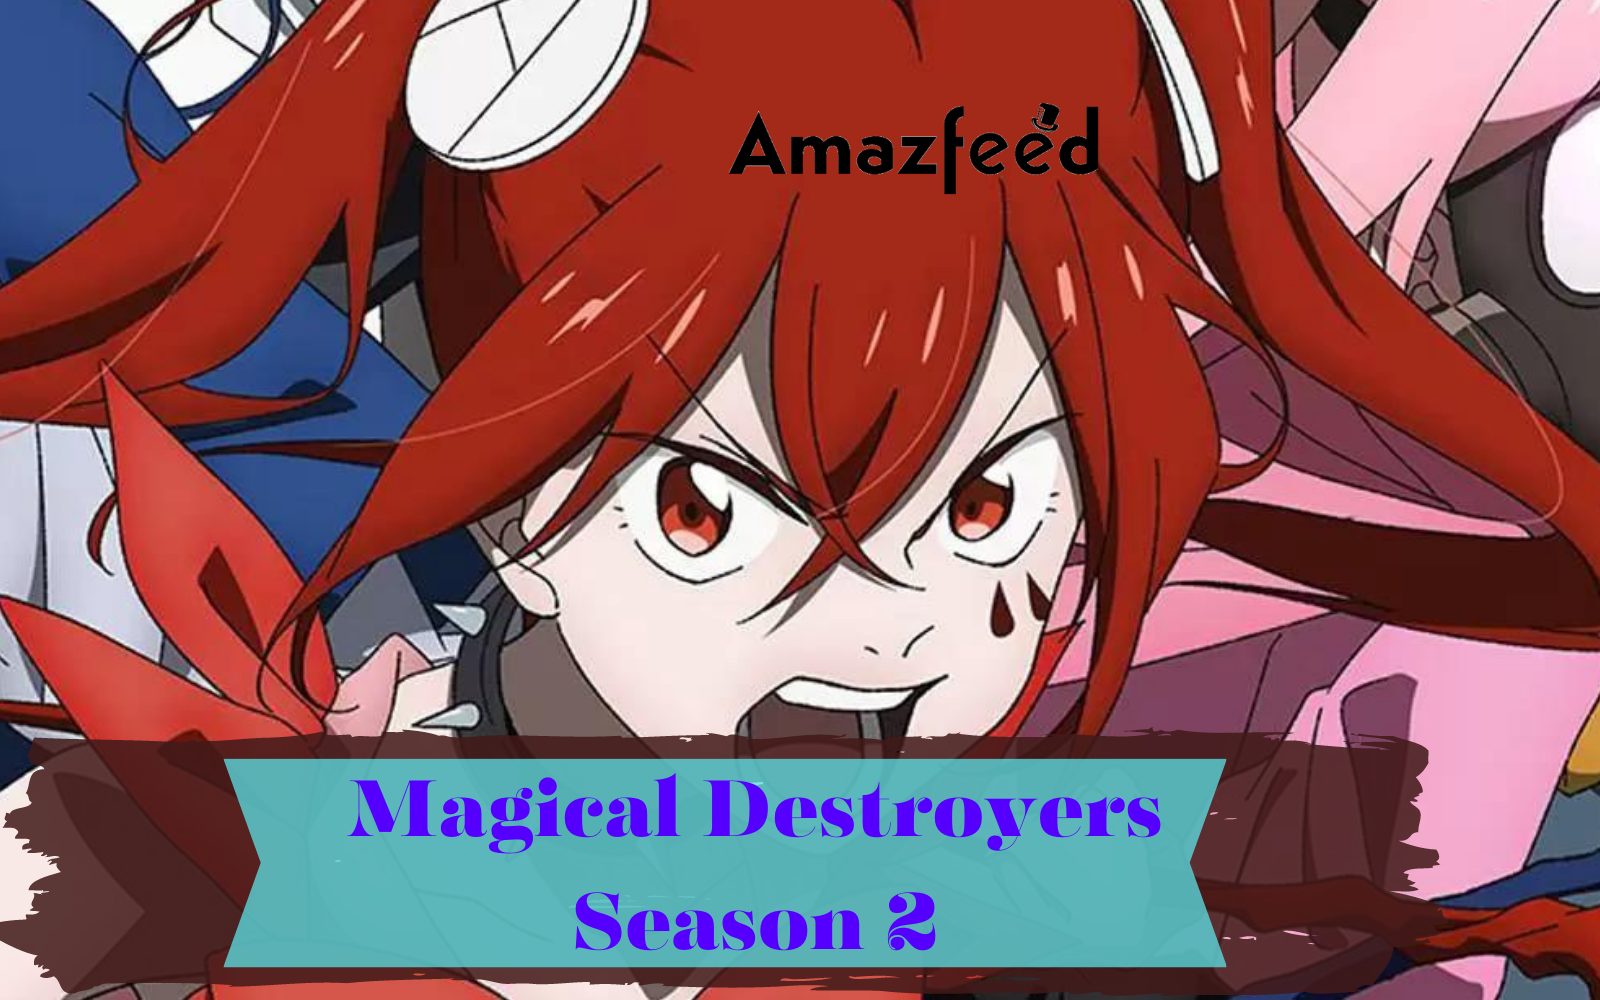 Episode 1 - Magical Destroyers (Season 1, Episode 1) - Apple TV